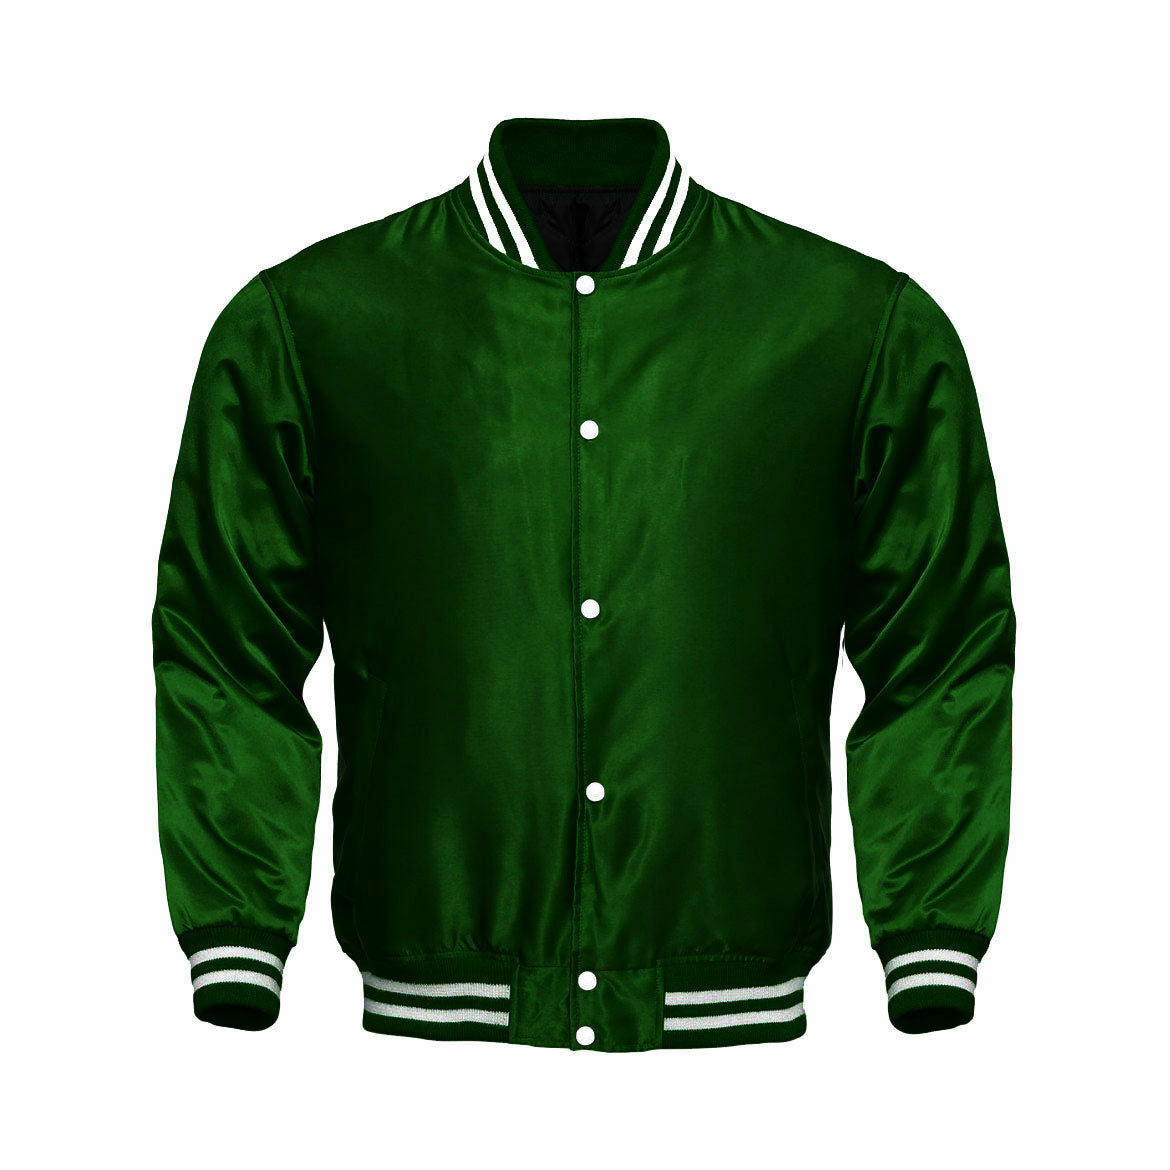 Spine Spark Forest Green Satin Varsity Jacket With White Rib